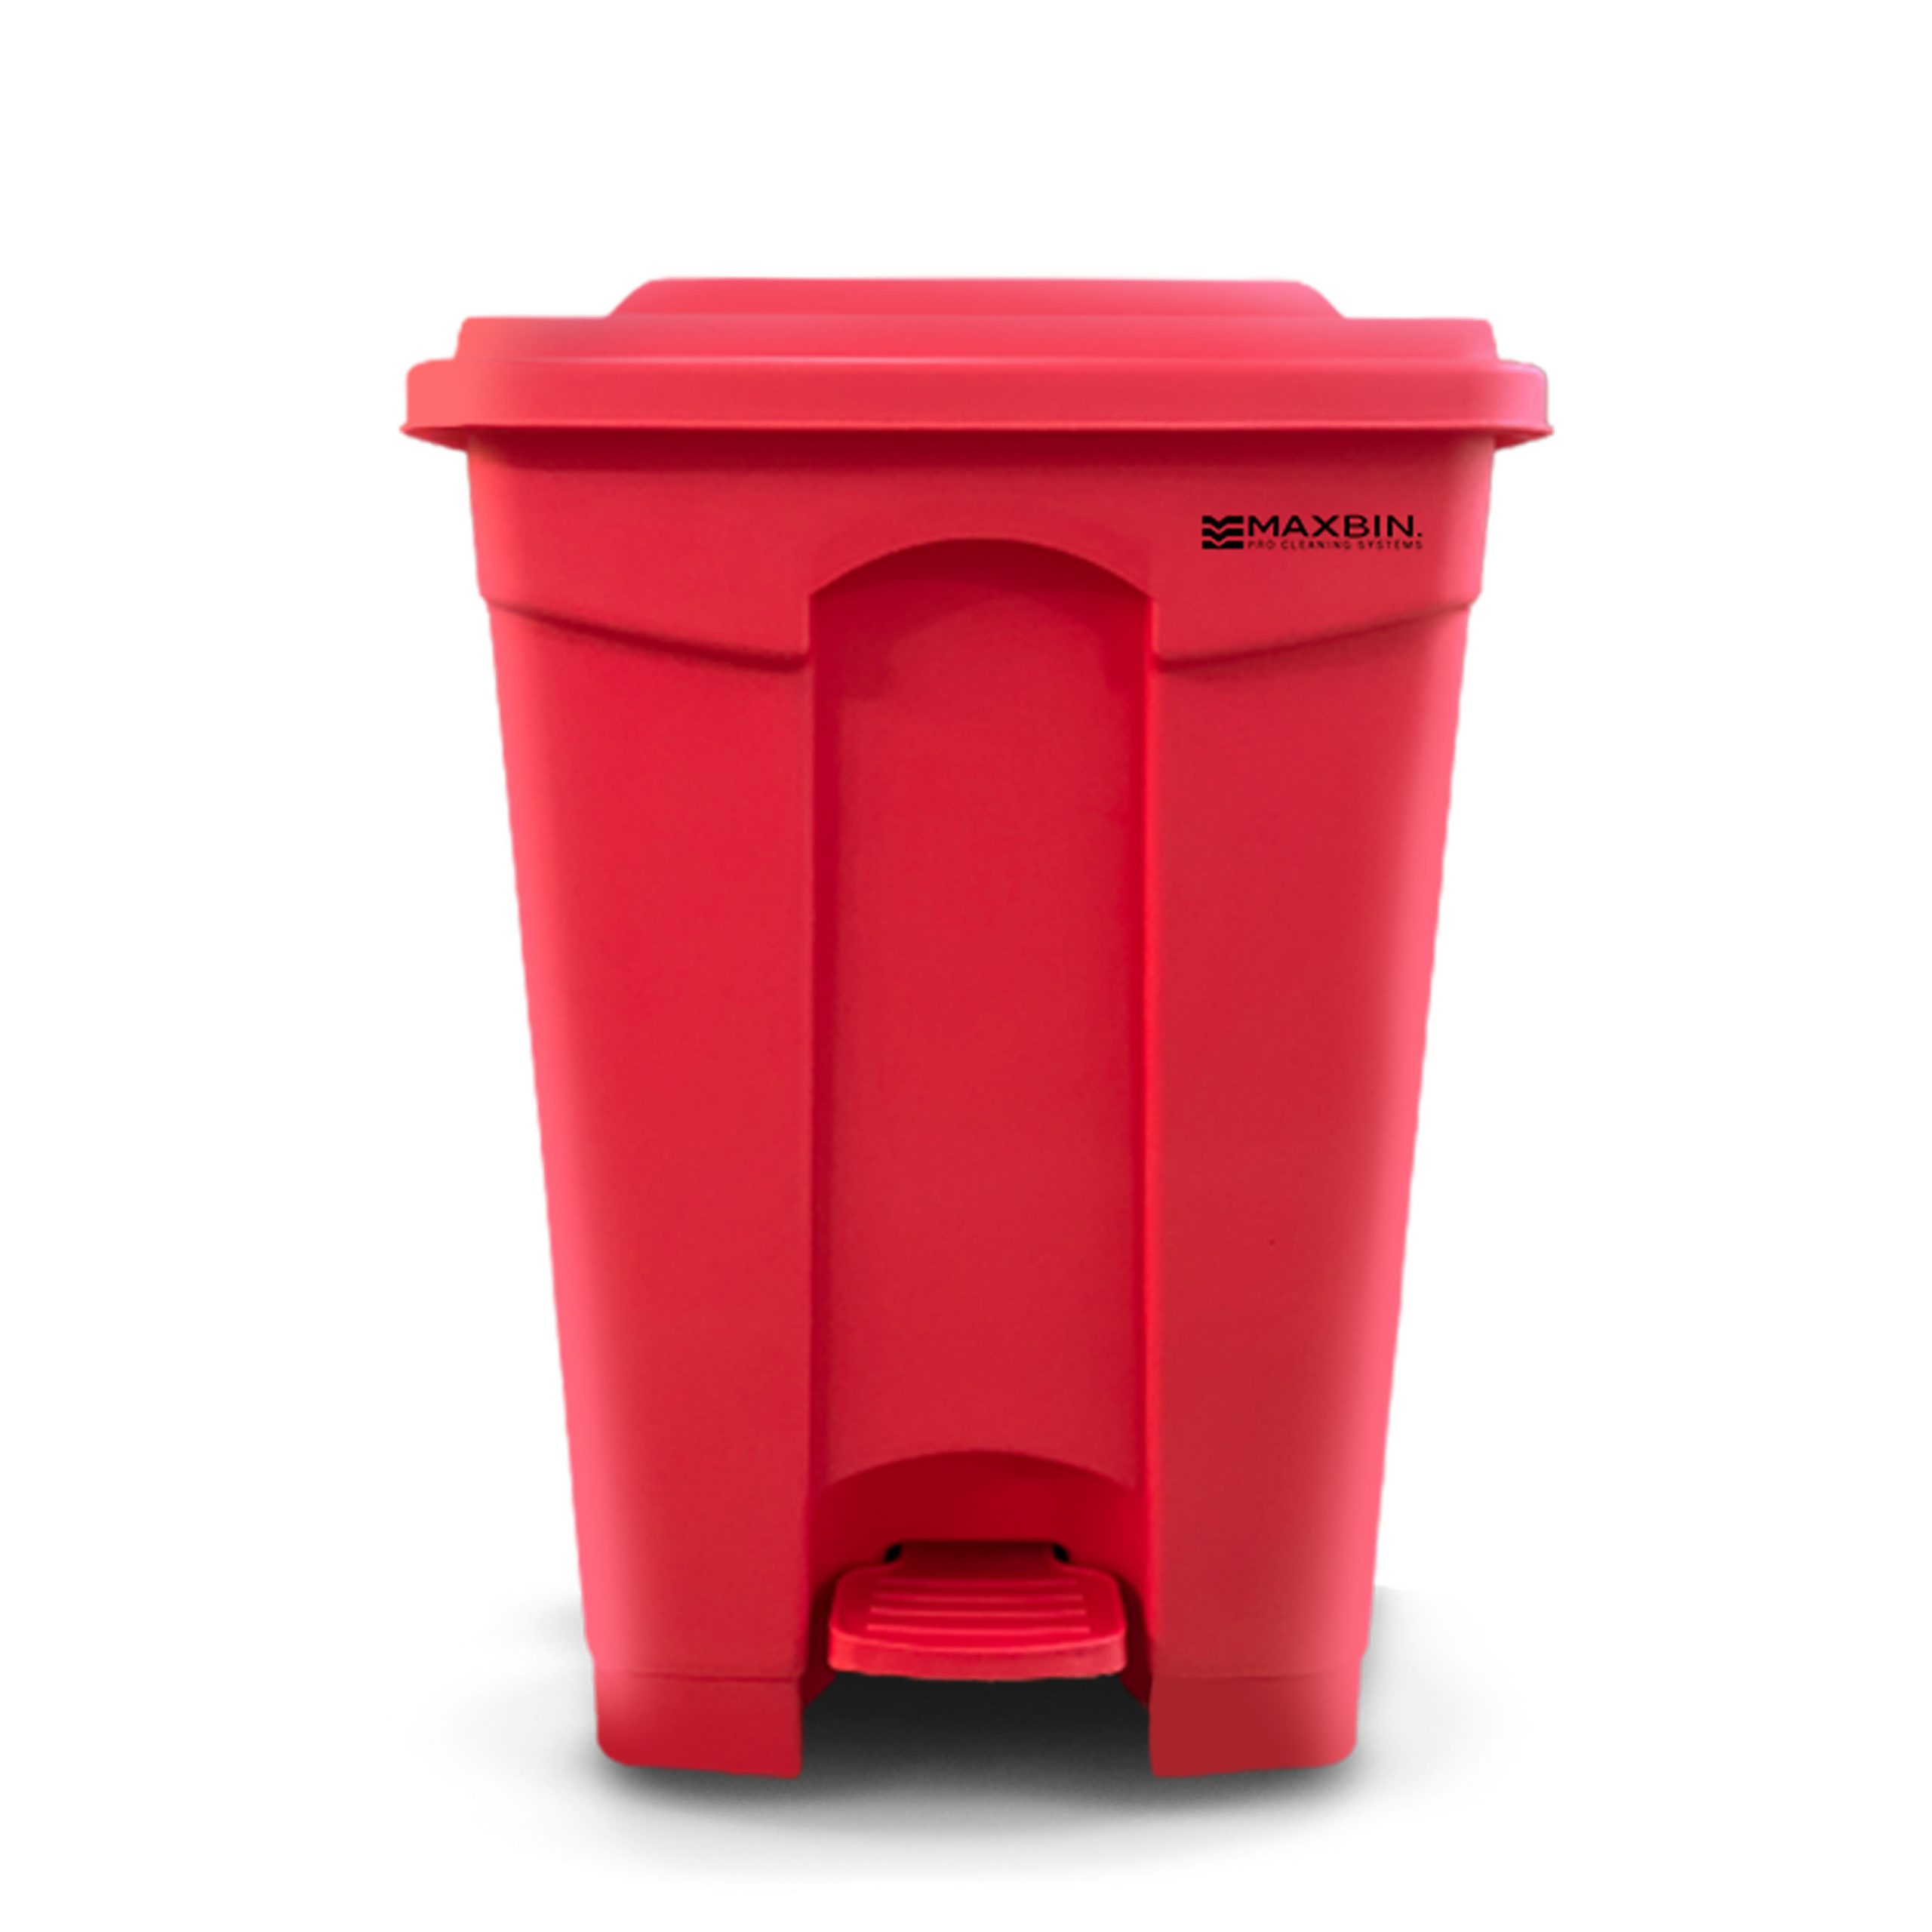 Max Bin 45L Heavy Duty Trash Bin Red | Trash Can with Cover | Foot Pedal Trash Bin | HOSPECO